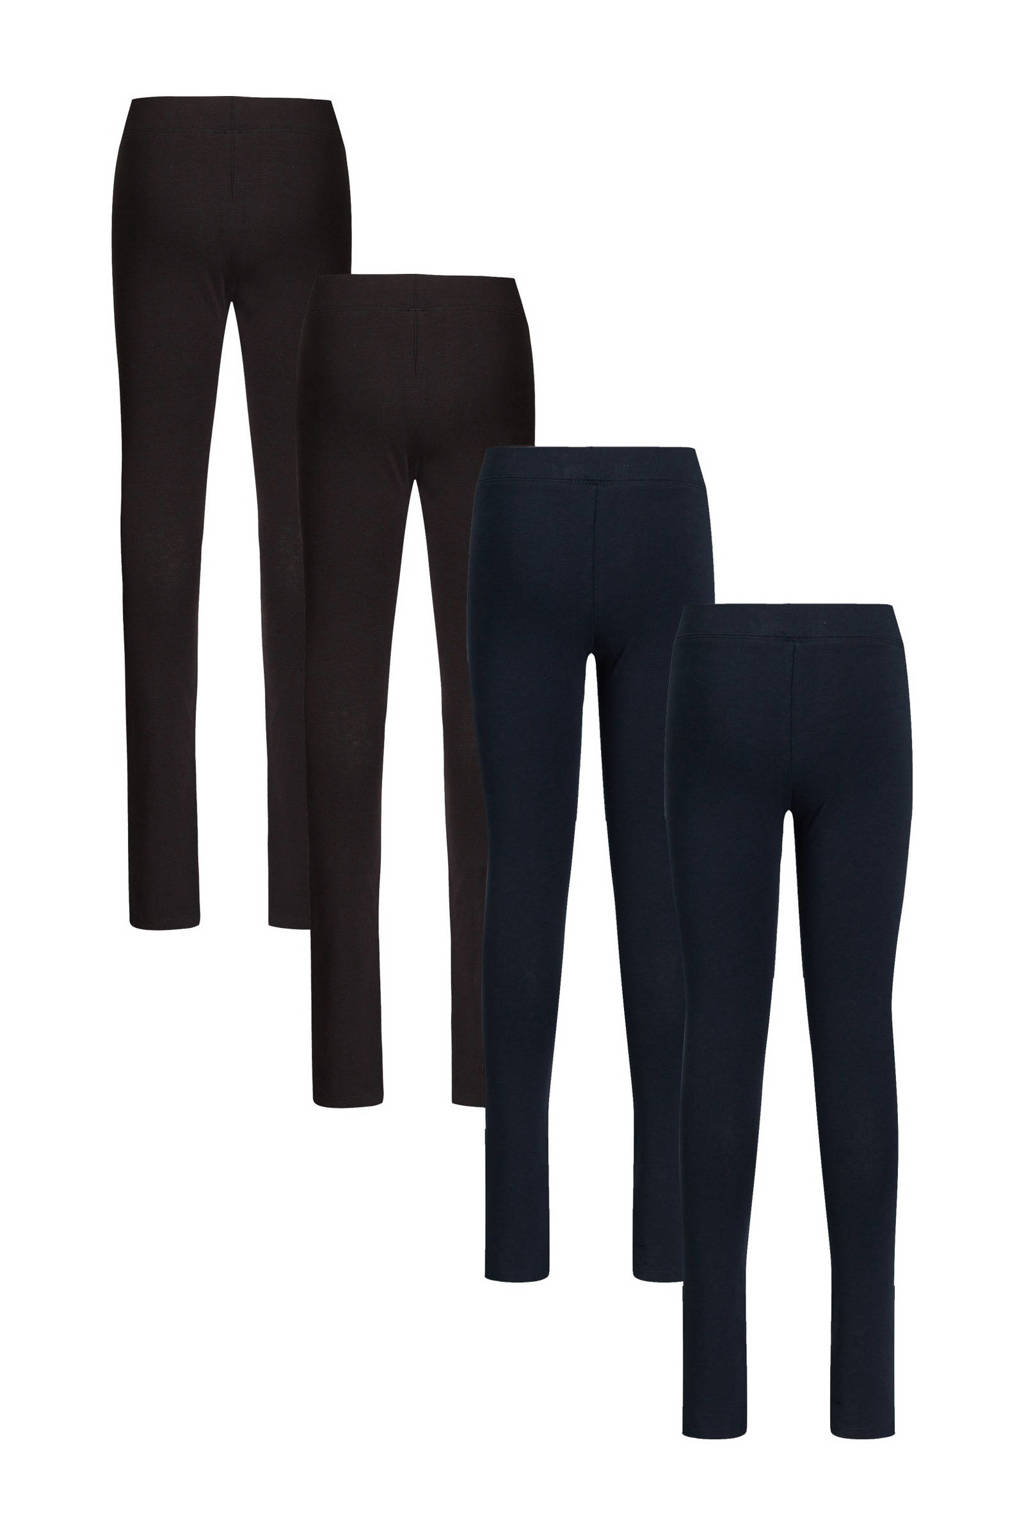 WE Fashion legging - set van 4 donkerblauw/zwart, Donkerblauw/zwart